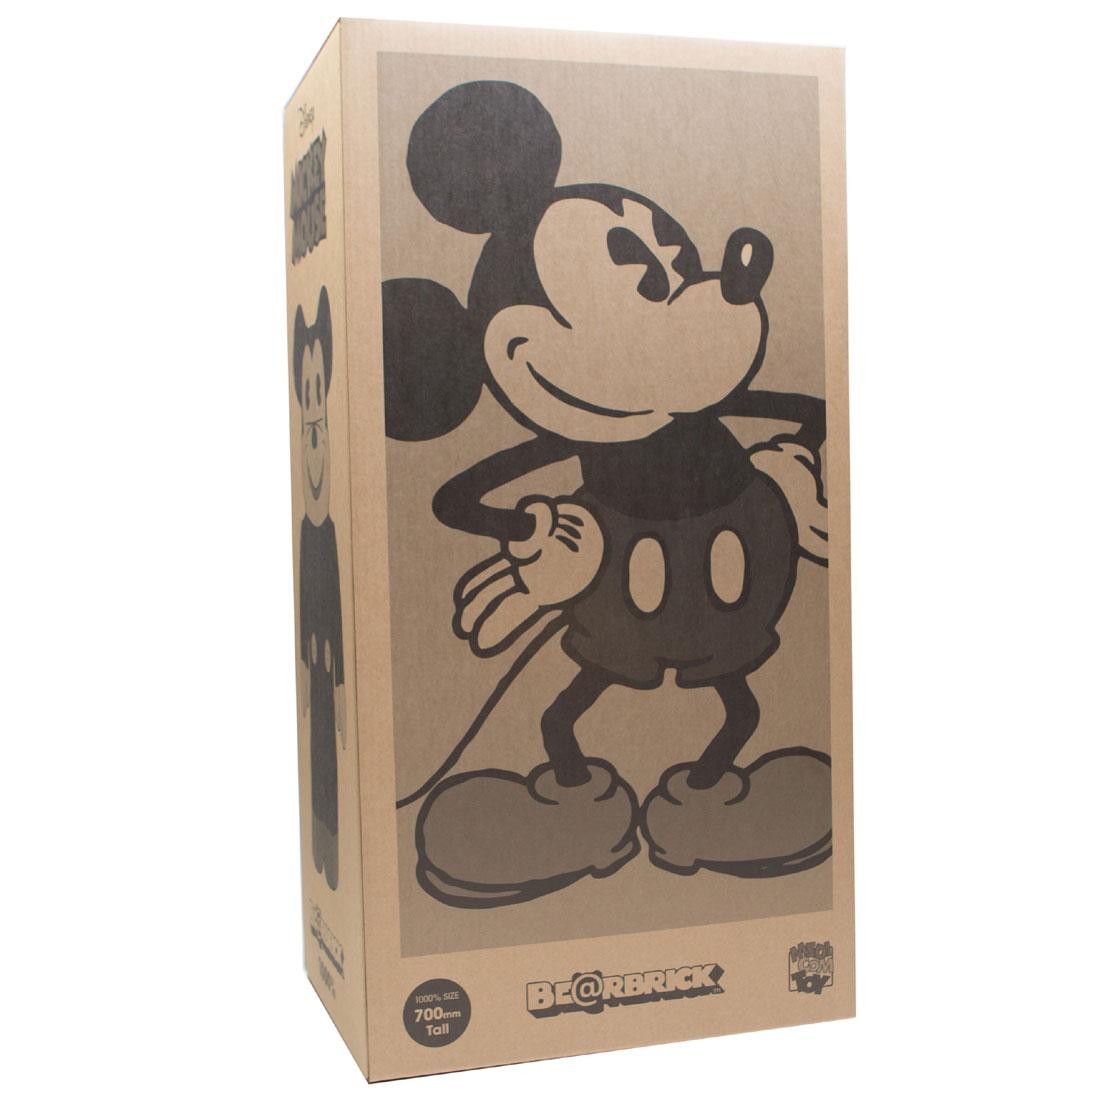 Medicom Disney Mickey Mouse Vintage B&W Ver. 1000% Bearbrick Figure (black  / white)